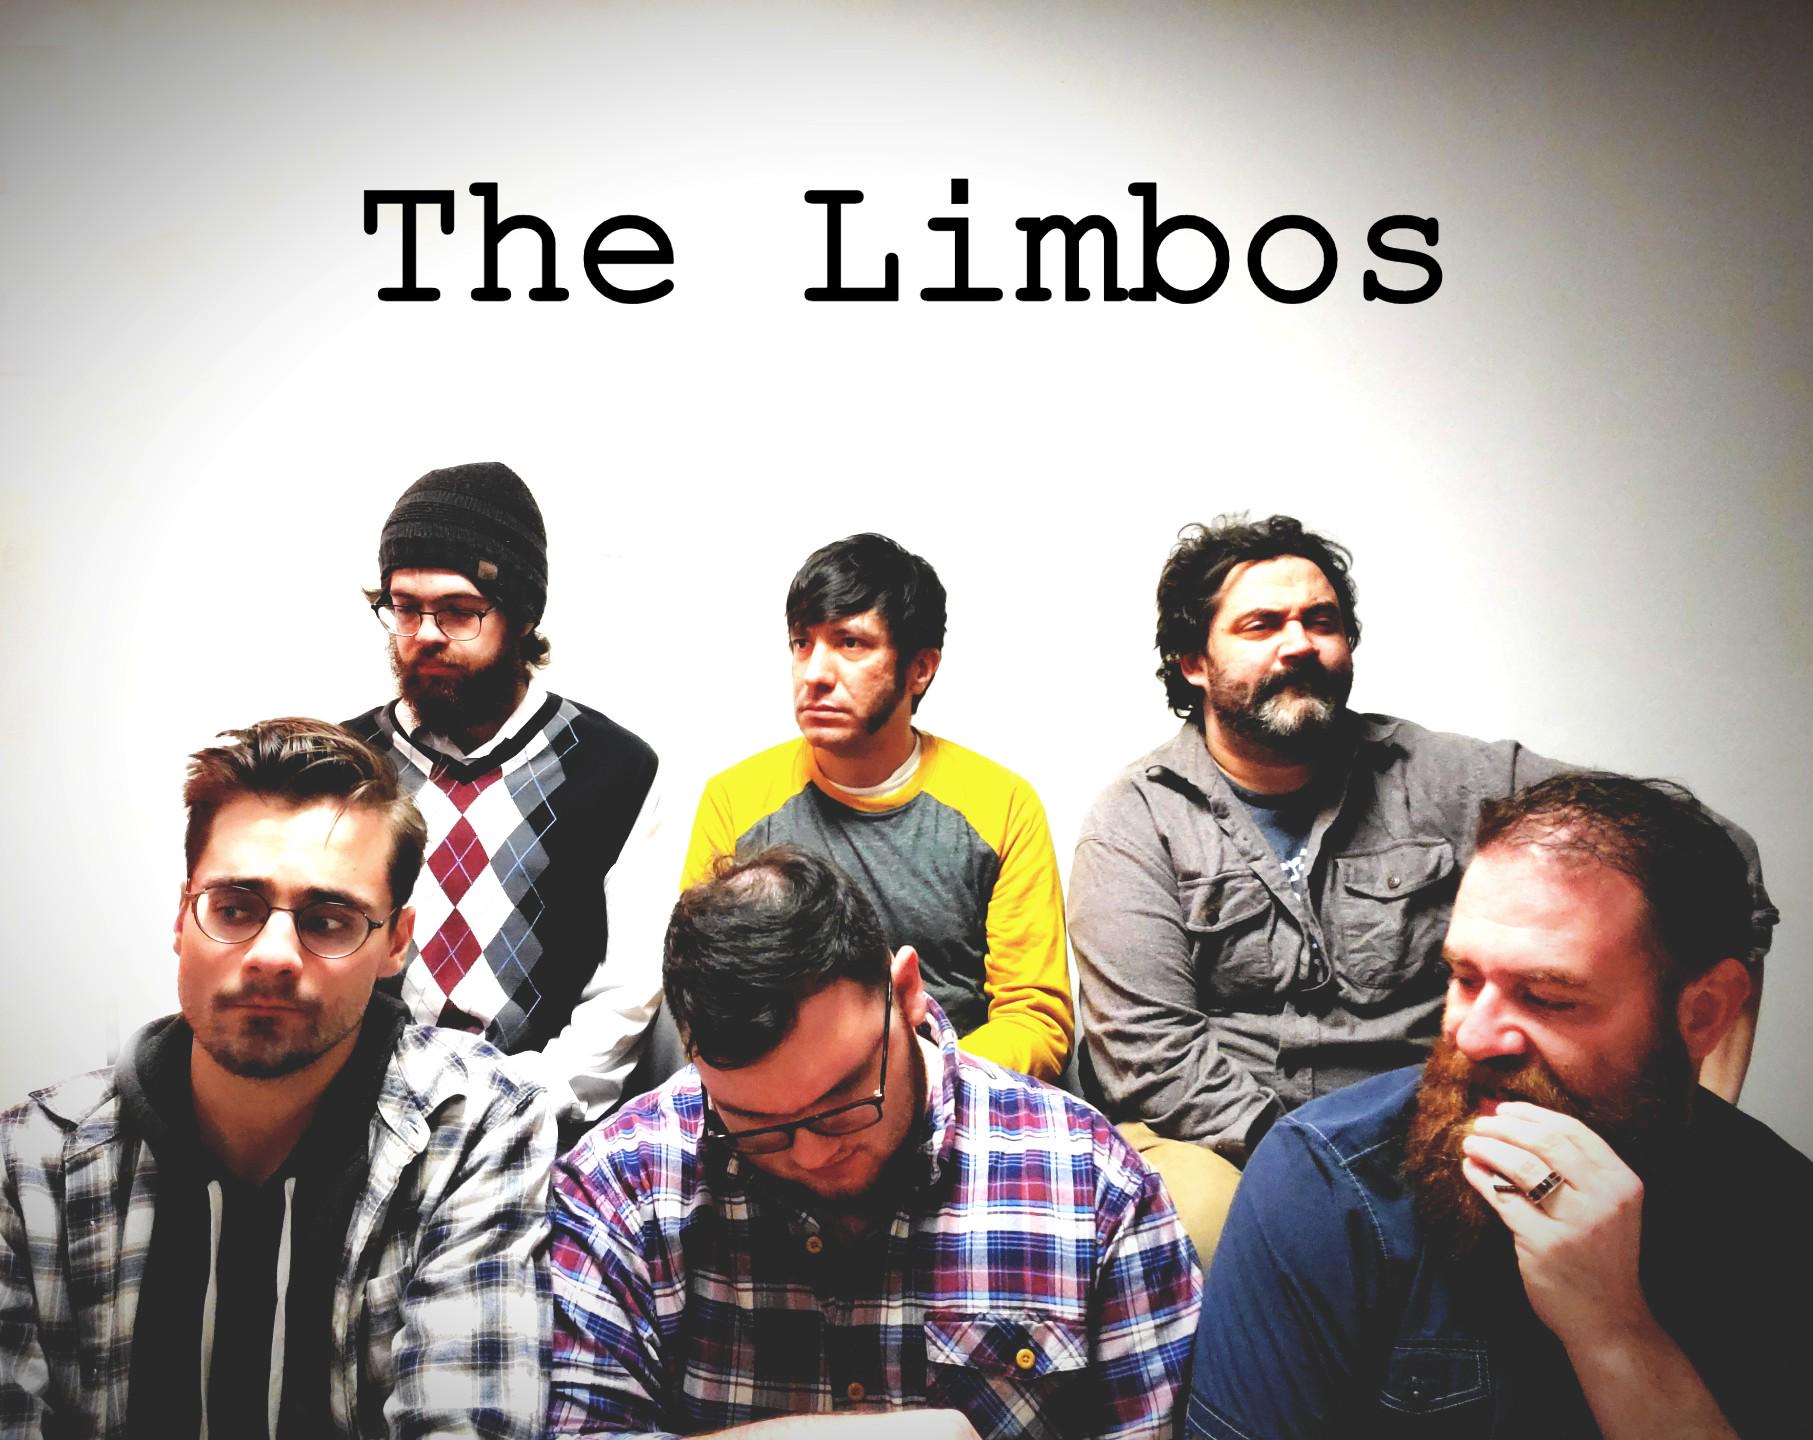 The Limbos